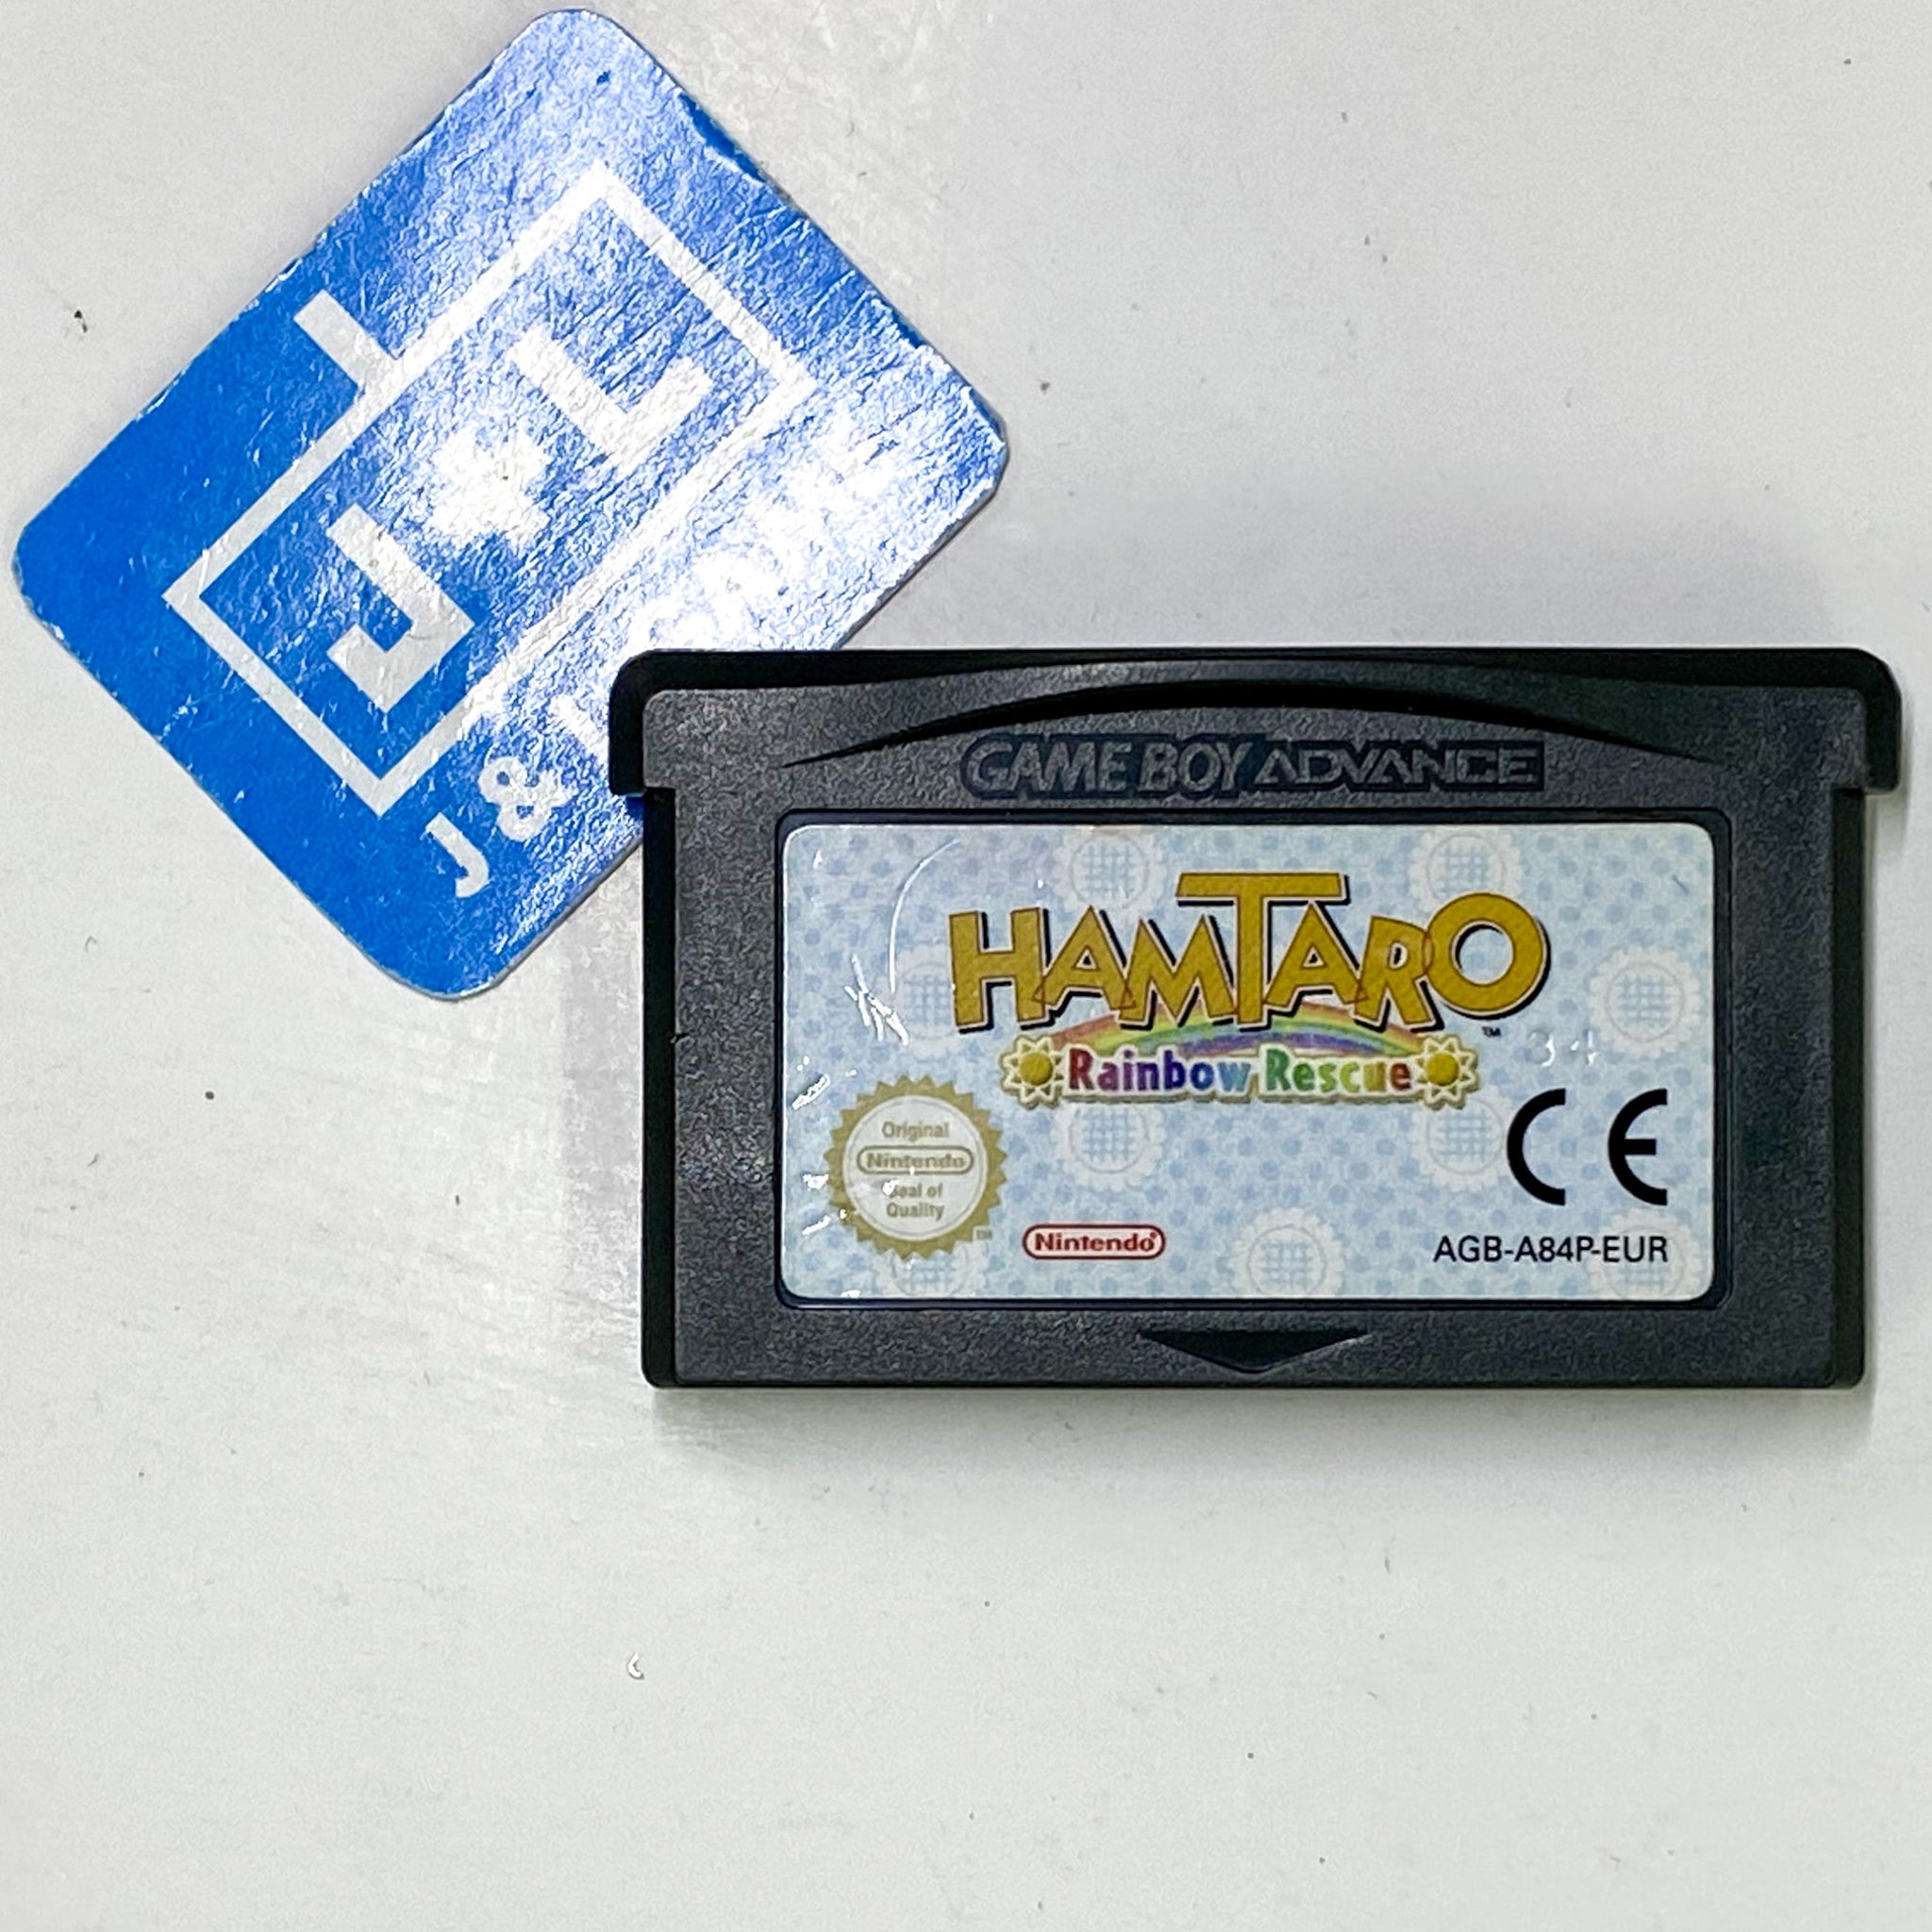 Hamtaro: Rainbow Rescue - (GBA) Game Boy Advance (European Import) [Pre-Owned] Video Games Nintendo   